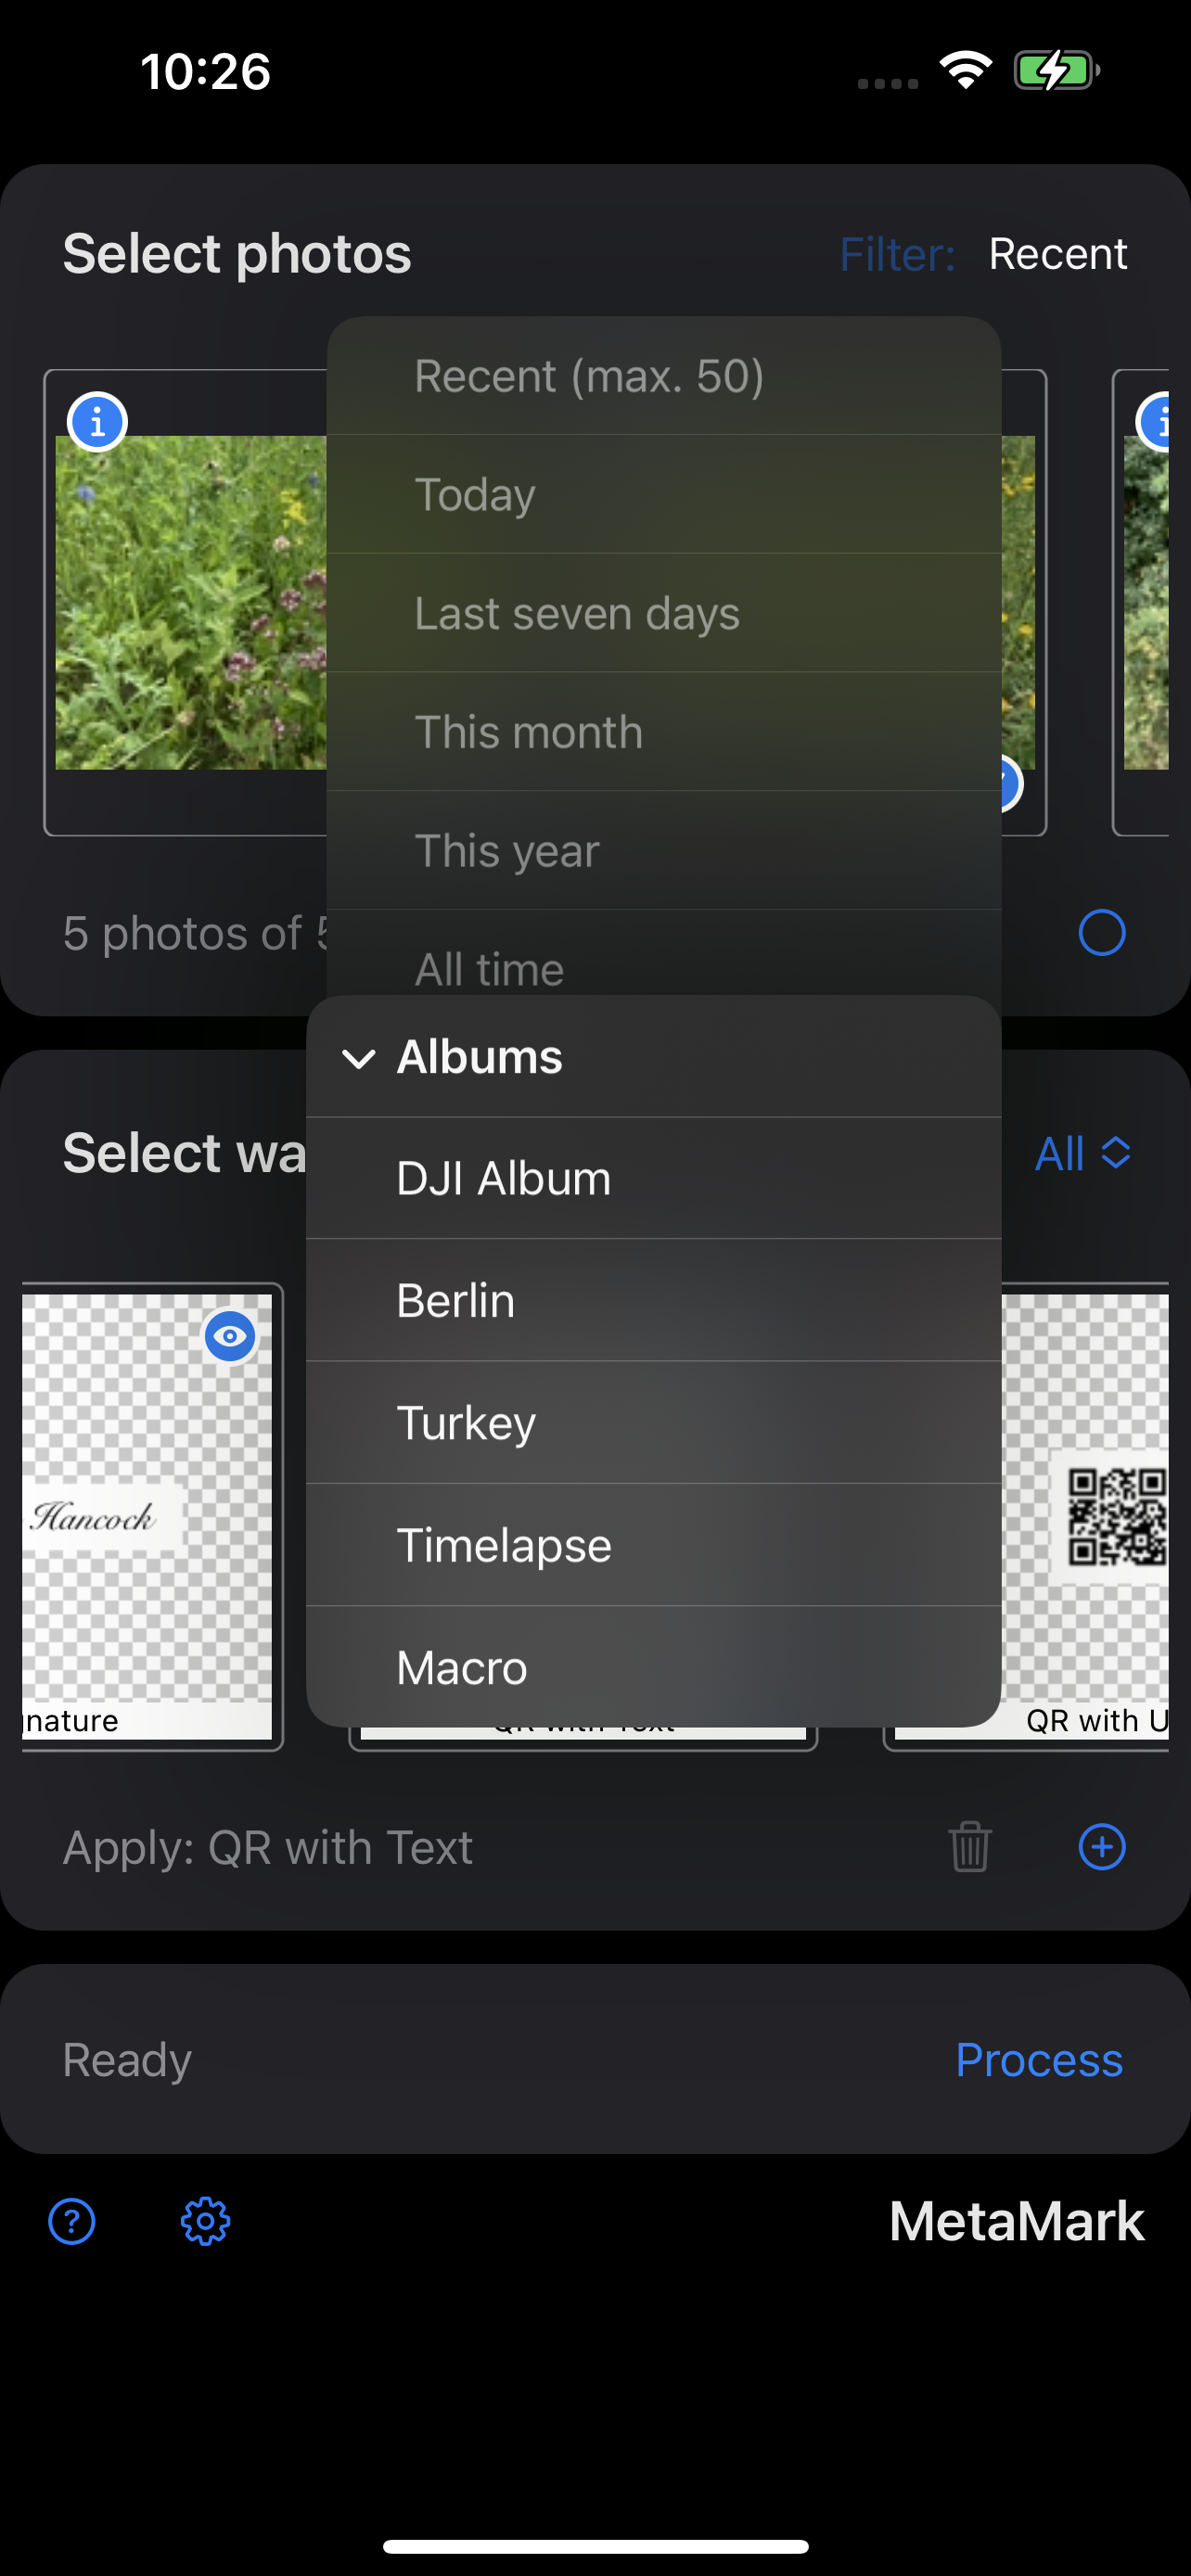 MetaMark Watermark Filter Photos and Albums on iPhone